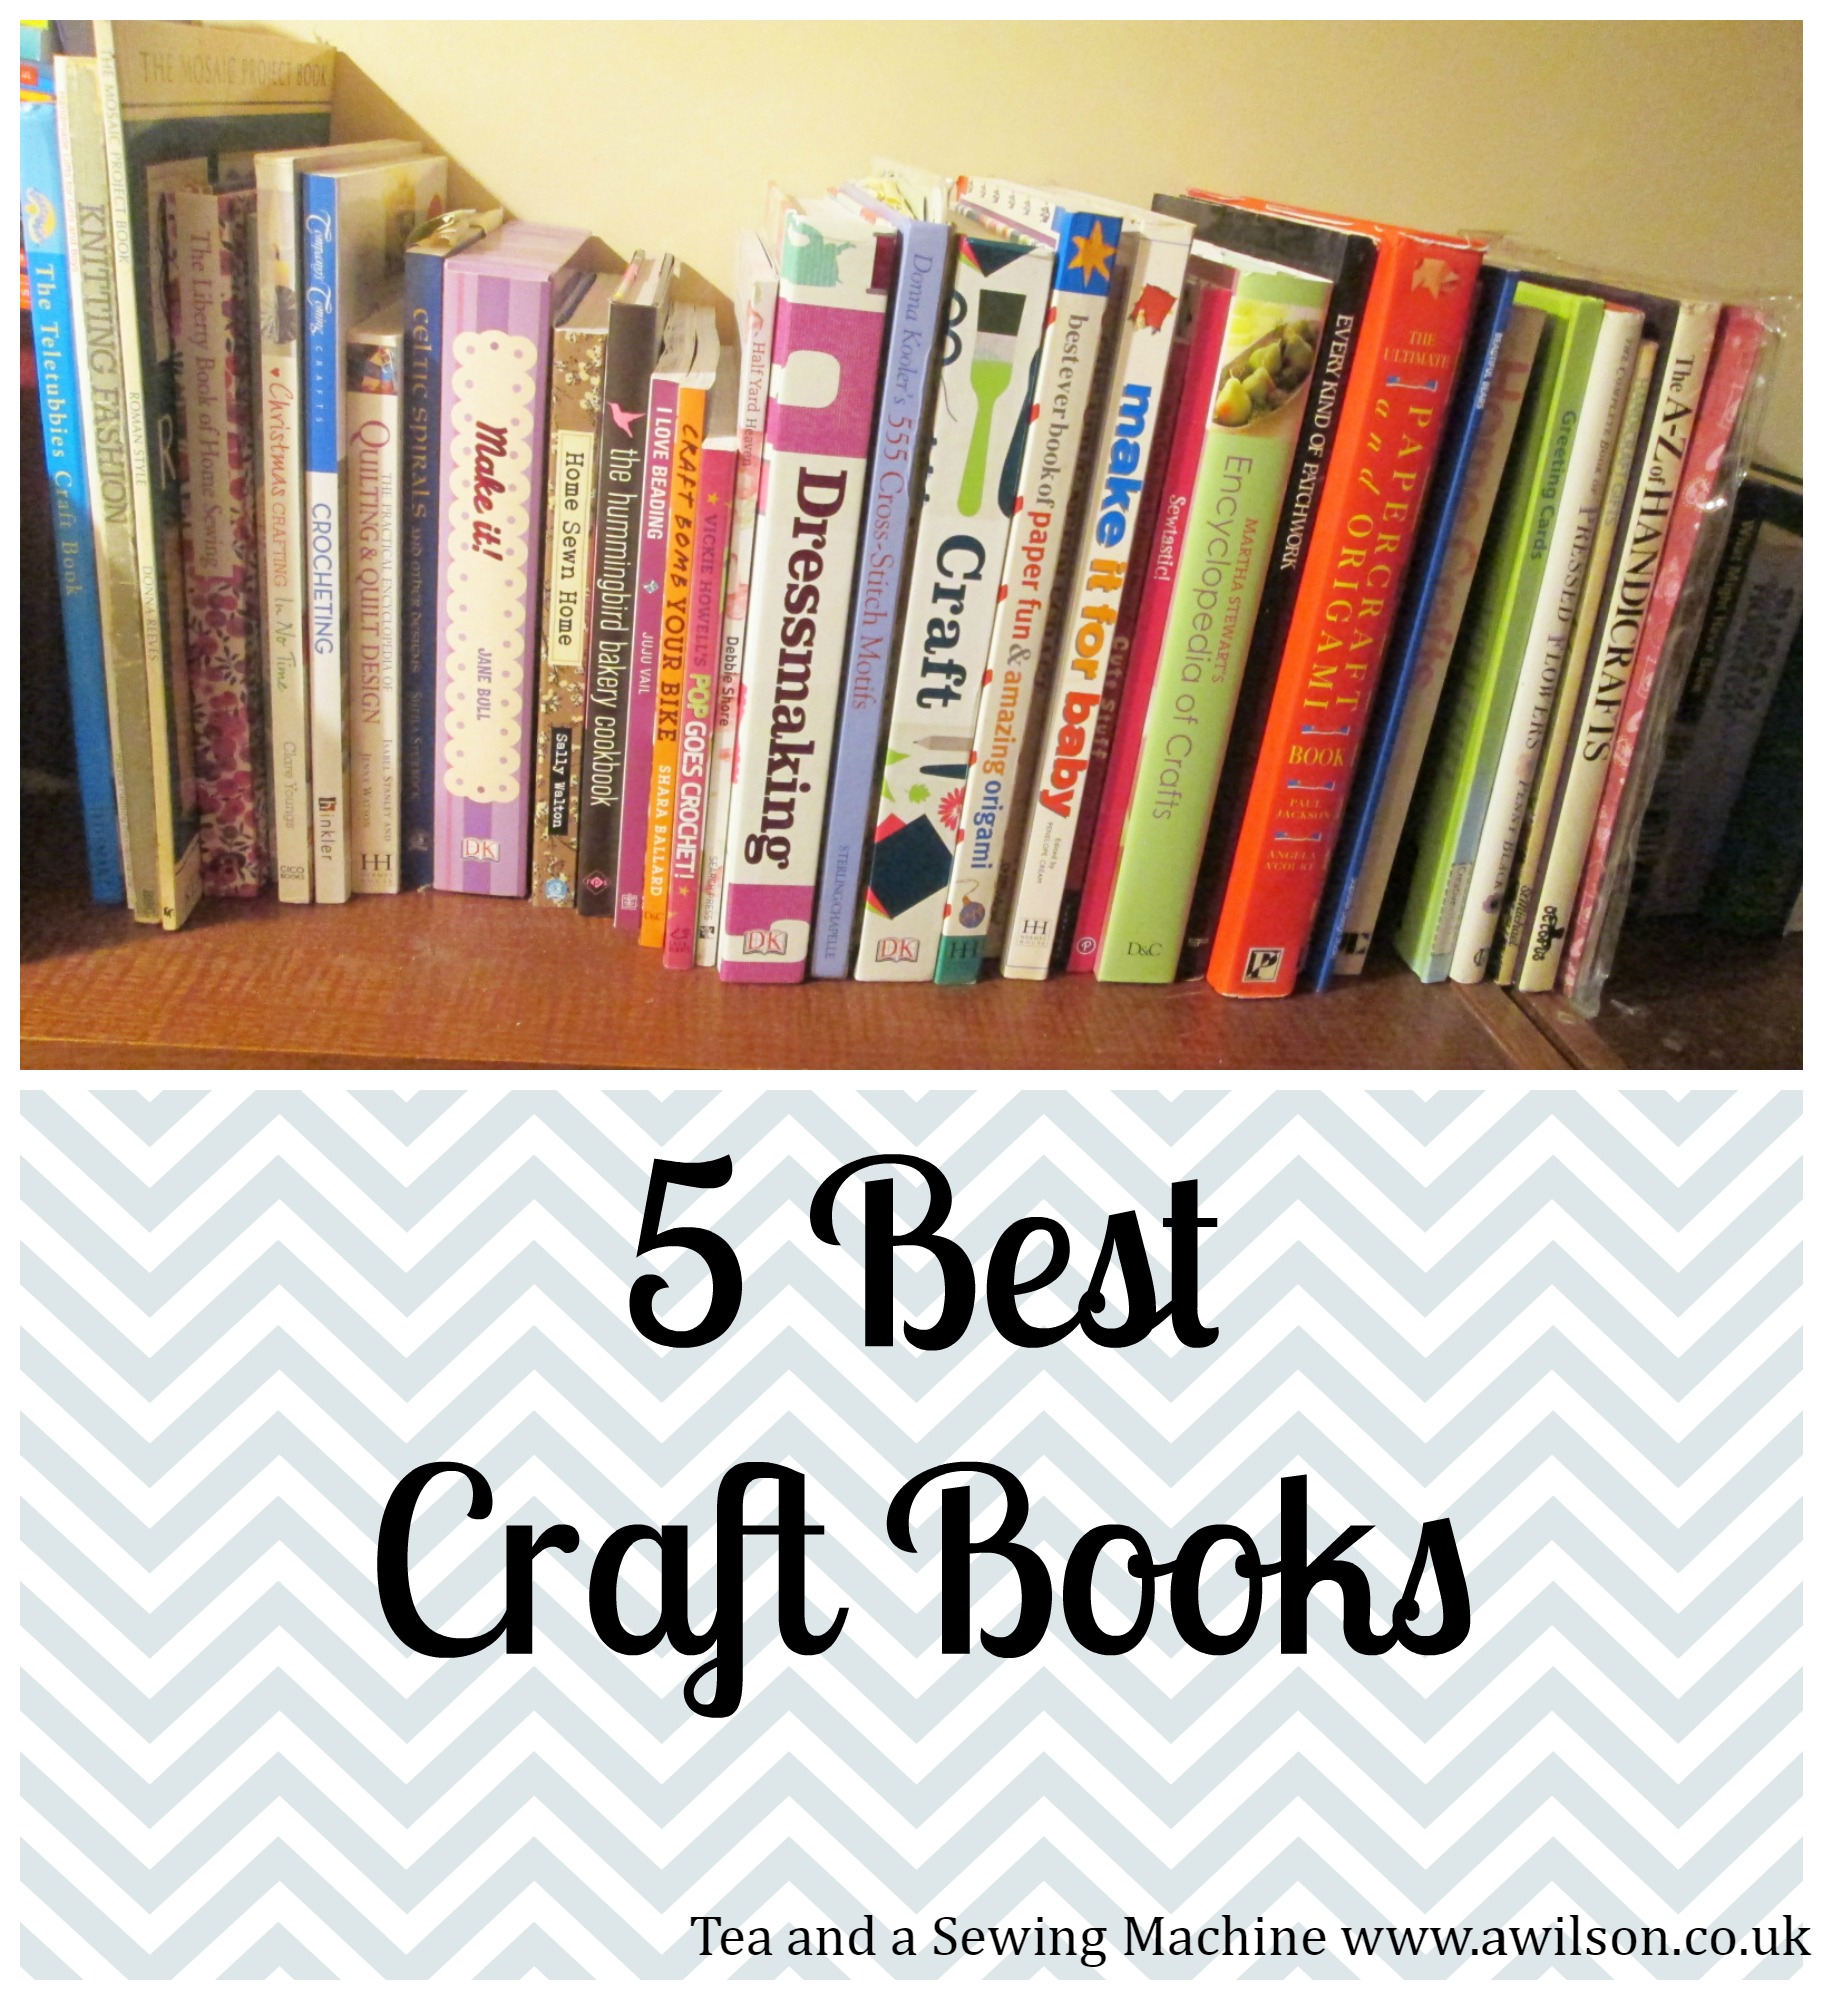 5 Best Craft Books - Tea and a Sewing Machine